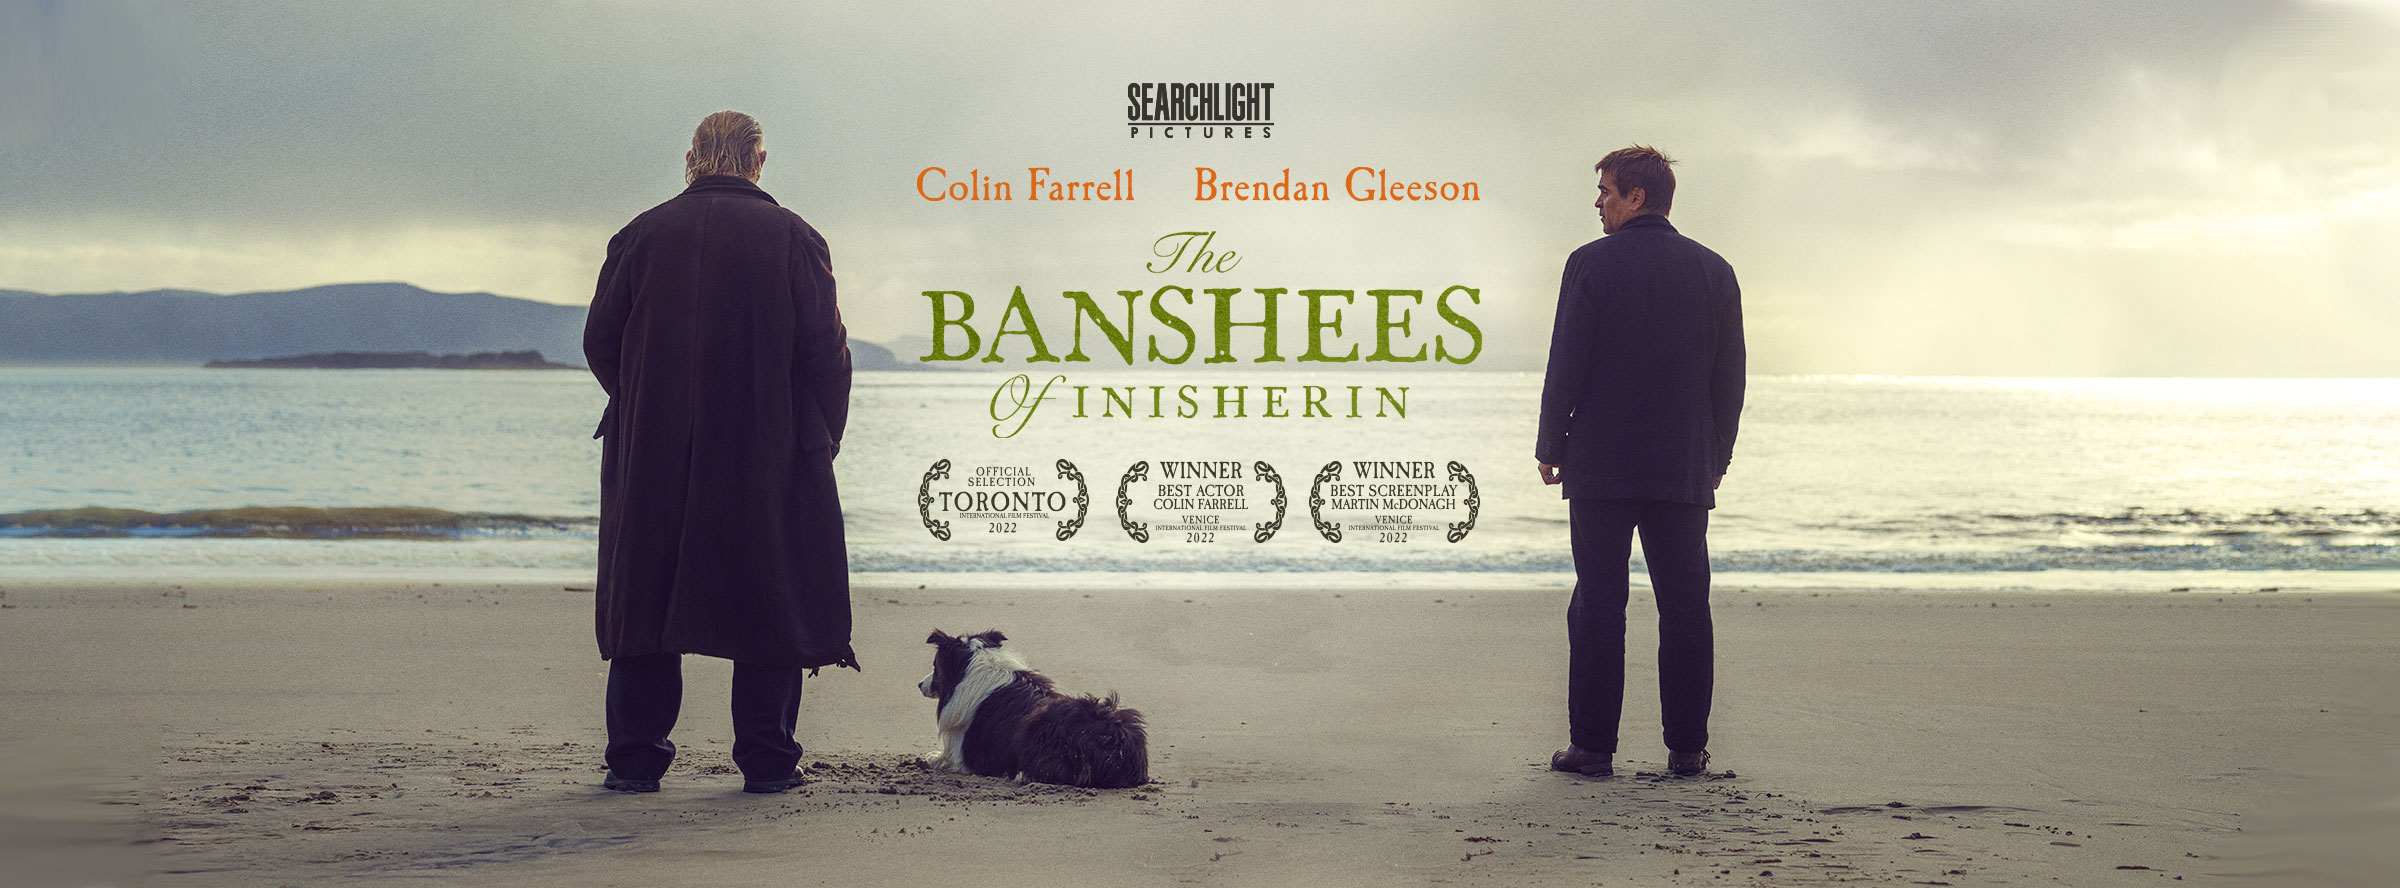 Slider Image for The Banshees of Inisherin